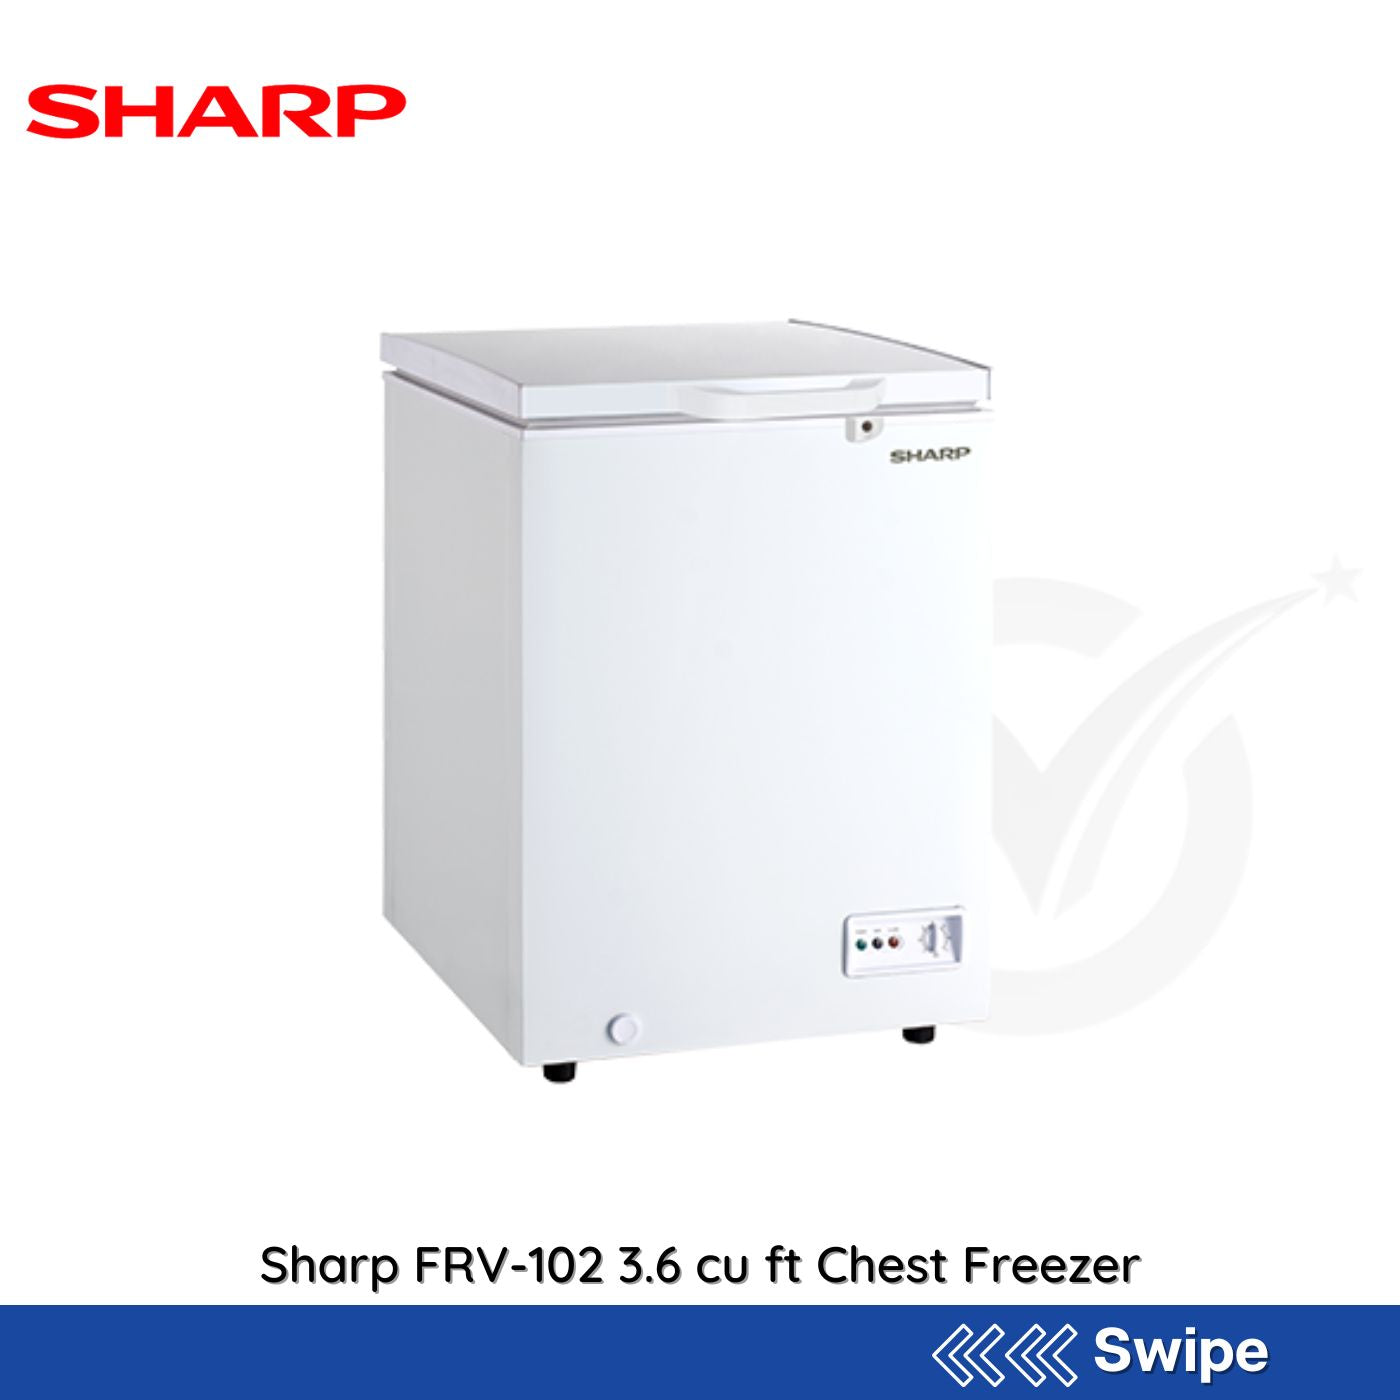 Sharp FRV-102 3.6 cu ft Chest Freezer